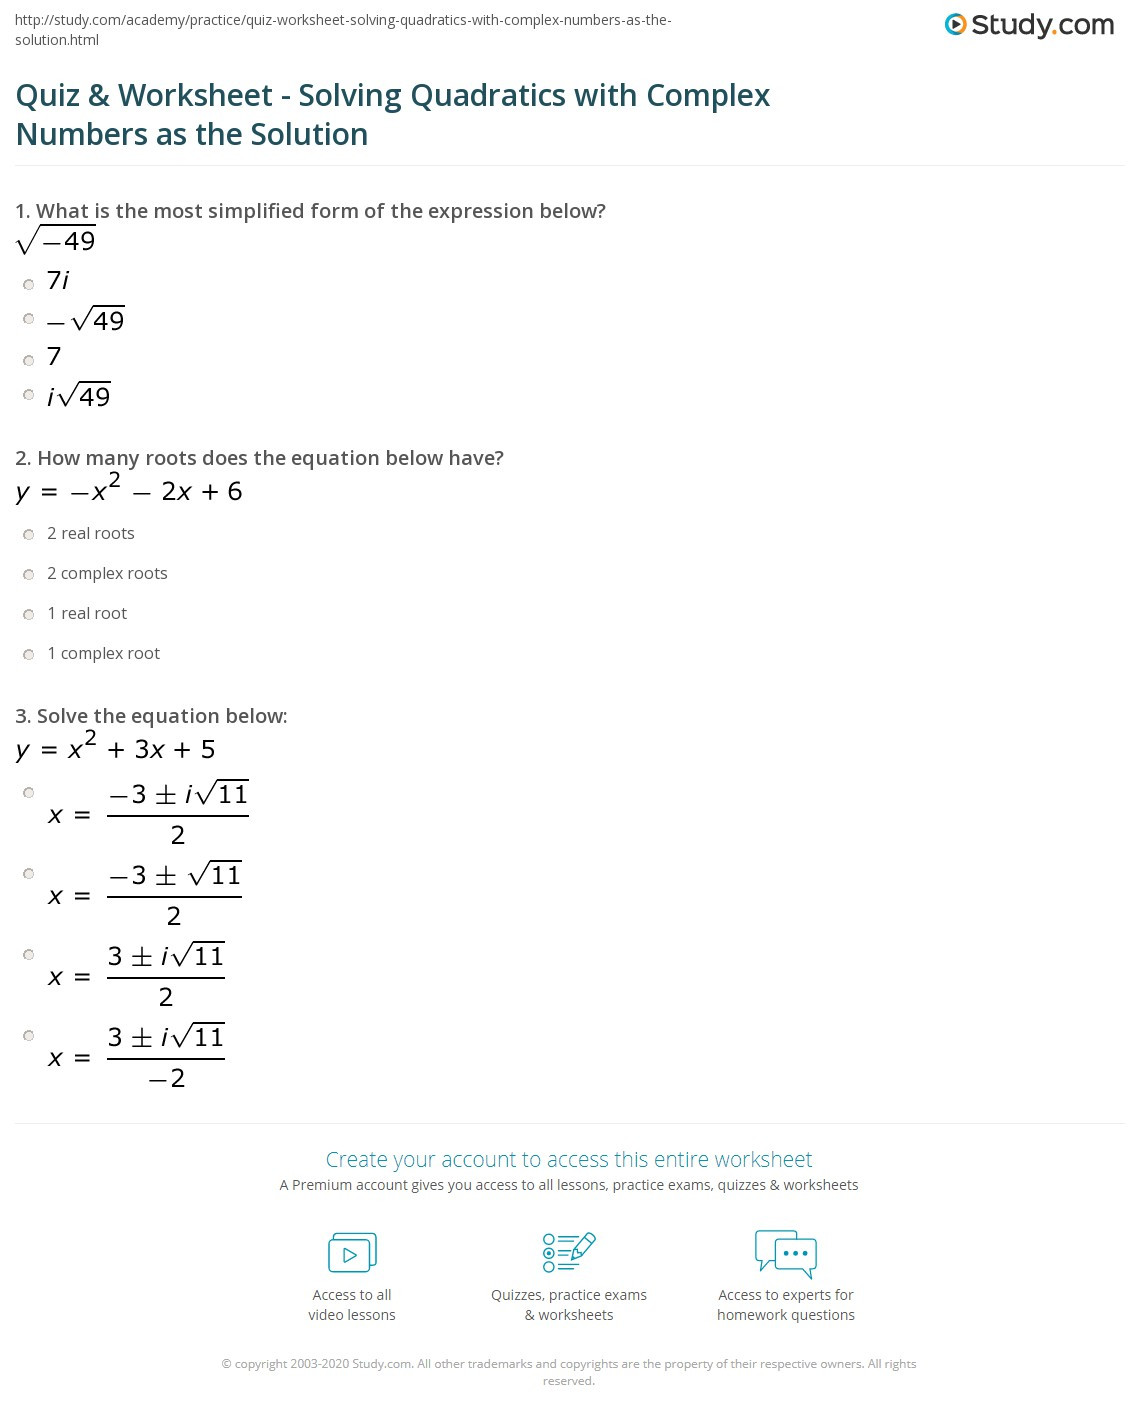 Complex Numbers Worksheet Answers Quiz &amp; Worksheet solving Quadratics with Plex Numbers